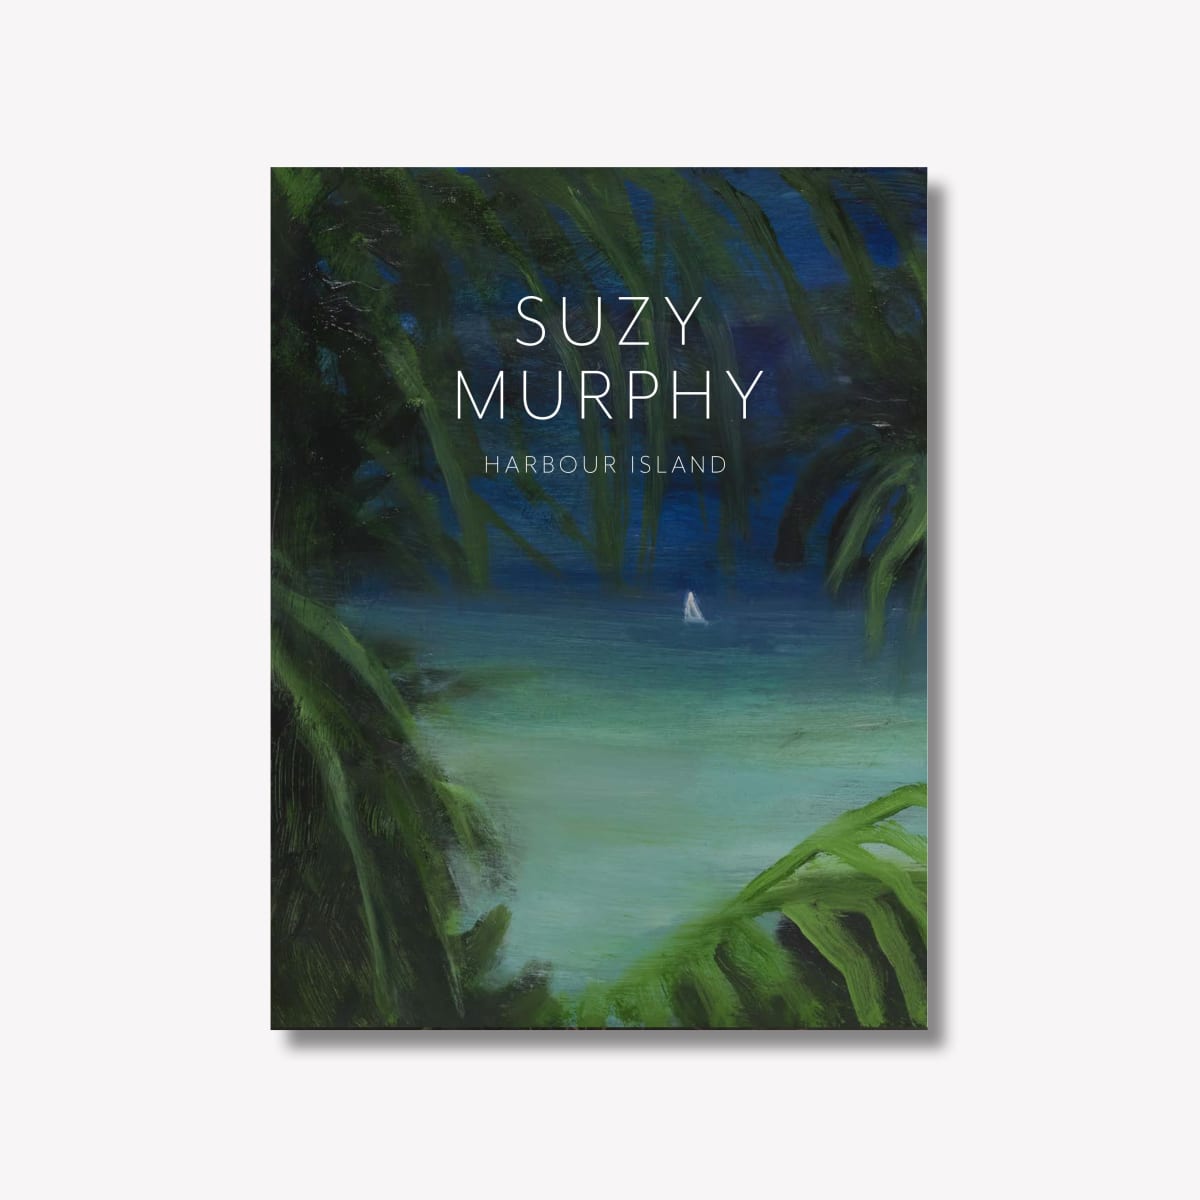 Suzy Murphy